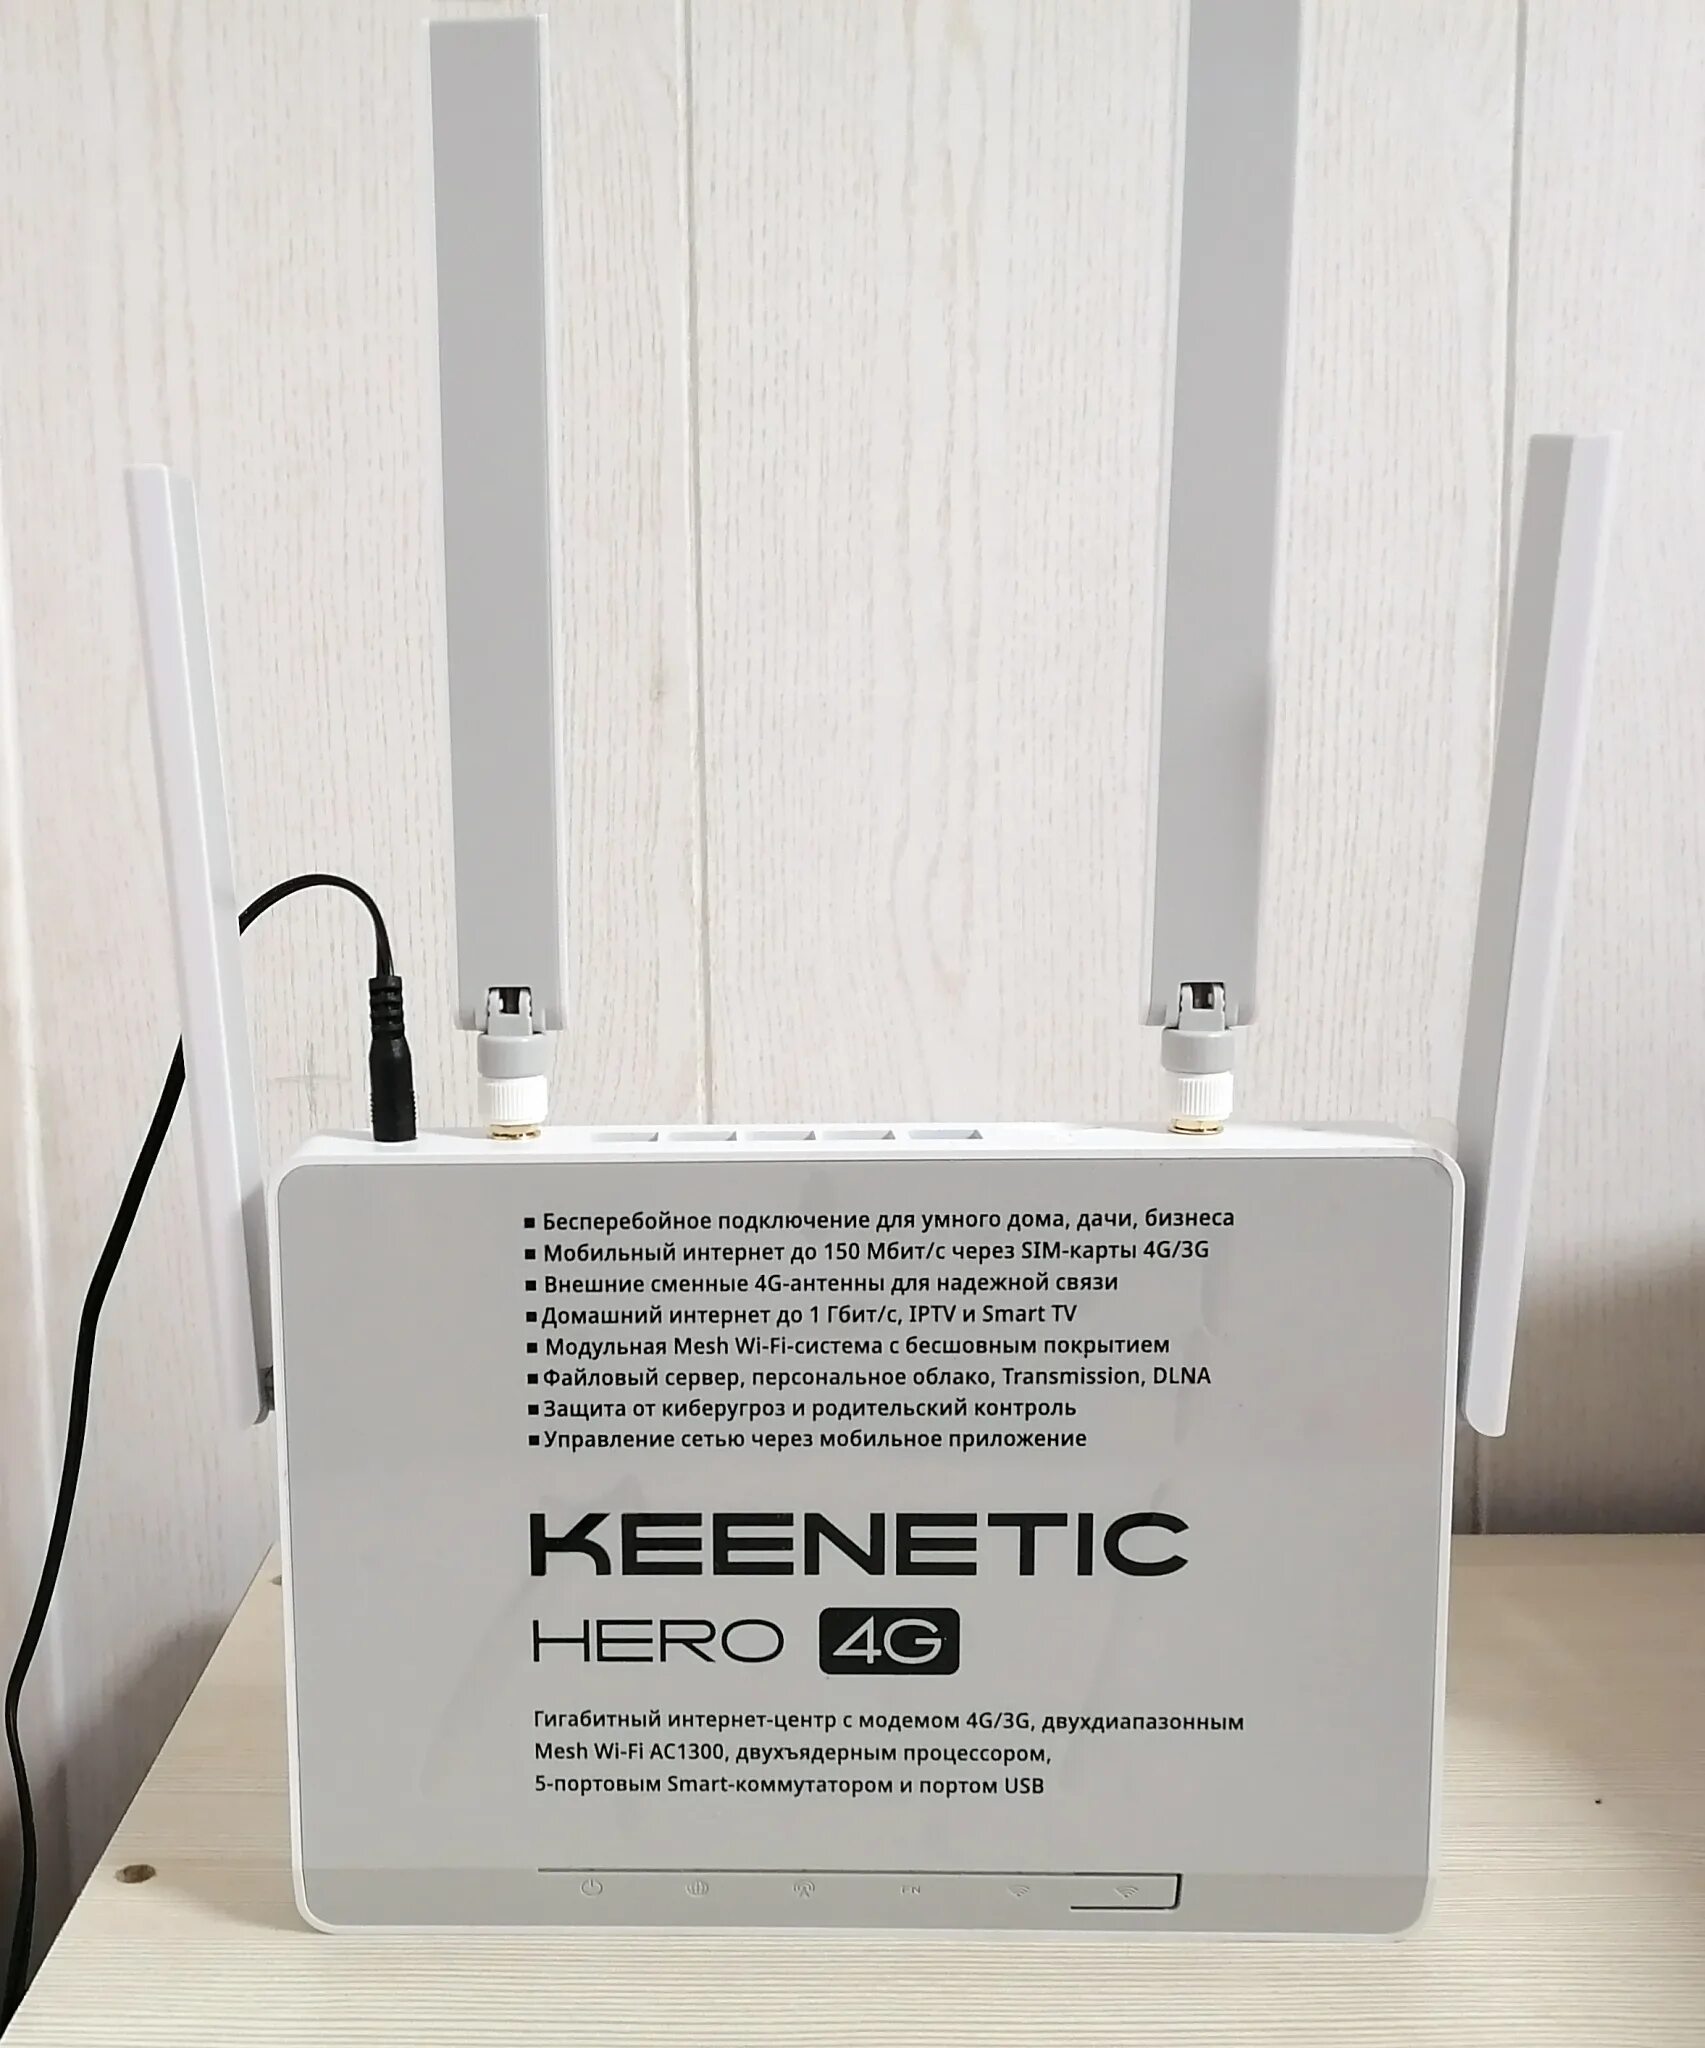 Hero 4g kn 2310. Wi-Fi роутер Keenetic Hero 4g (KN-2310). Keenetic Hero 4g. Wi-Fi роутер Keenetic Hero 4g KN-231.